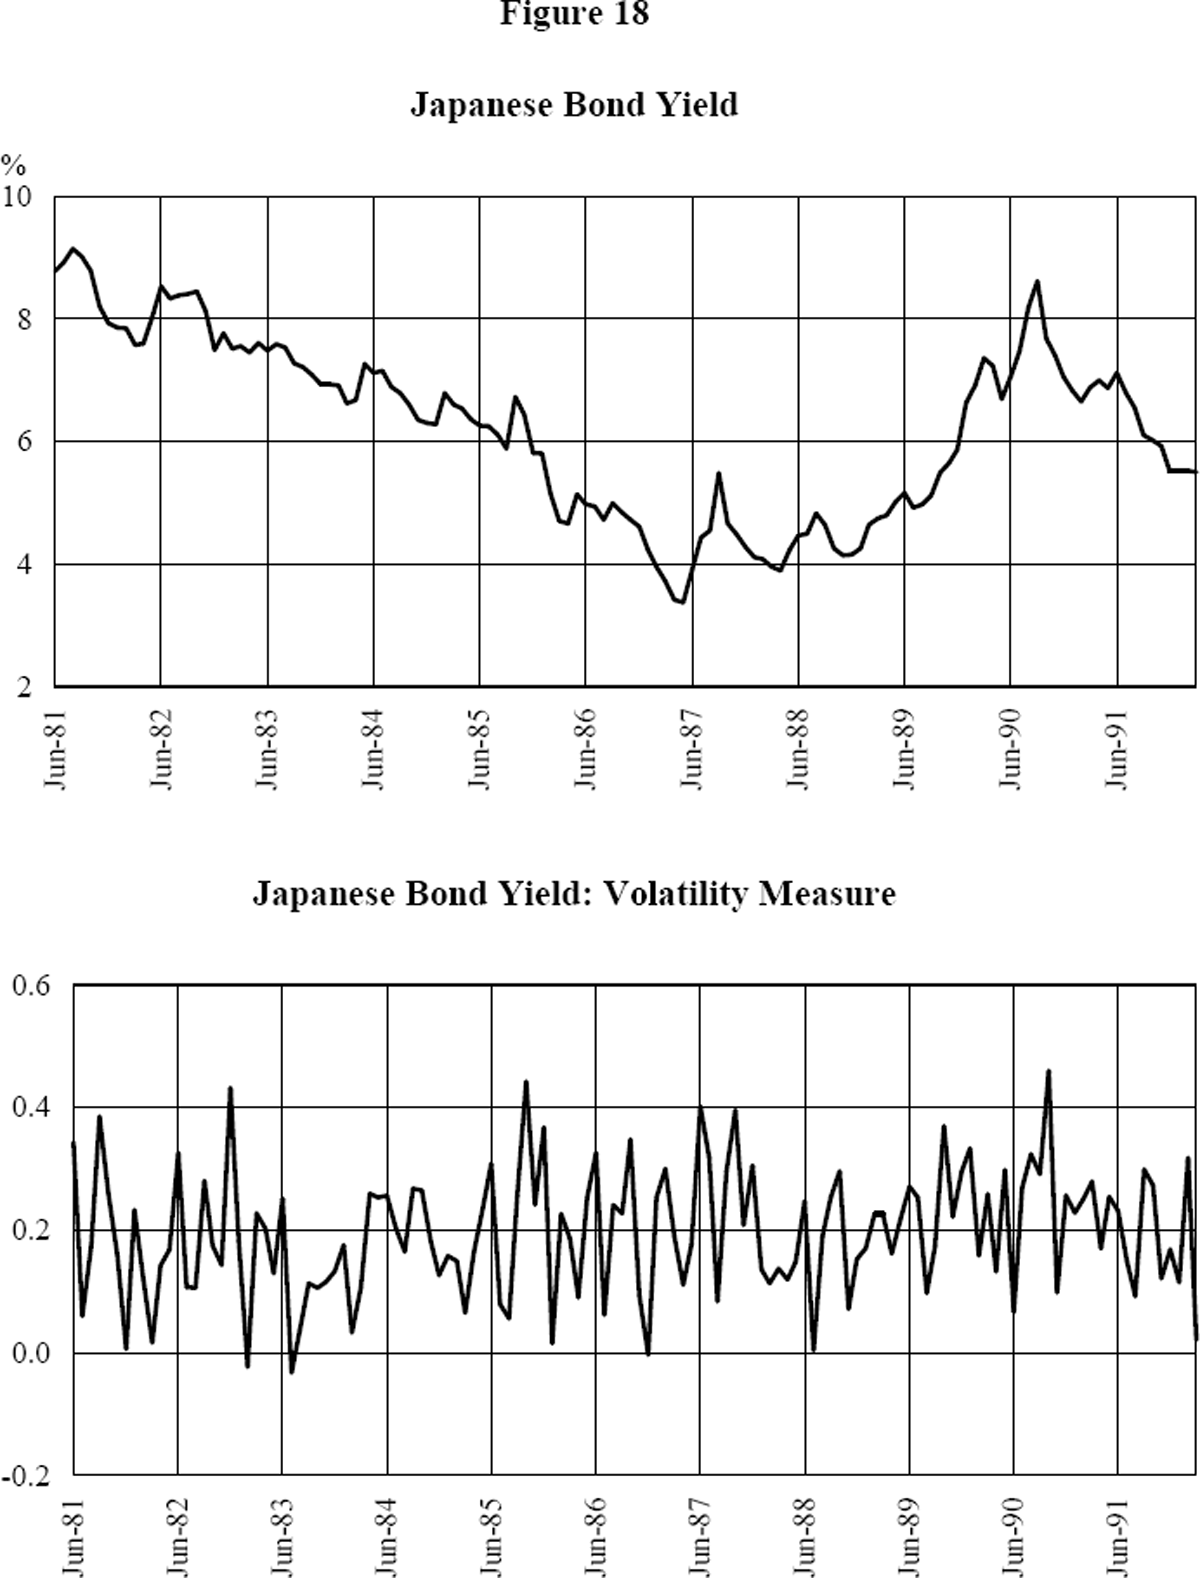 Figure 18: Japanese Bond Yield and Volatility Measure